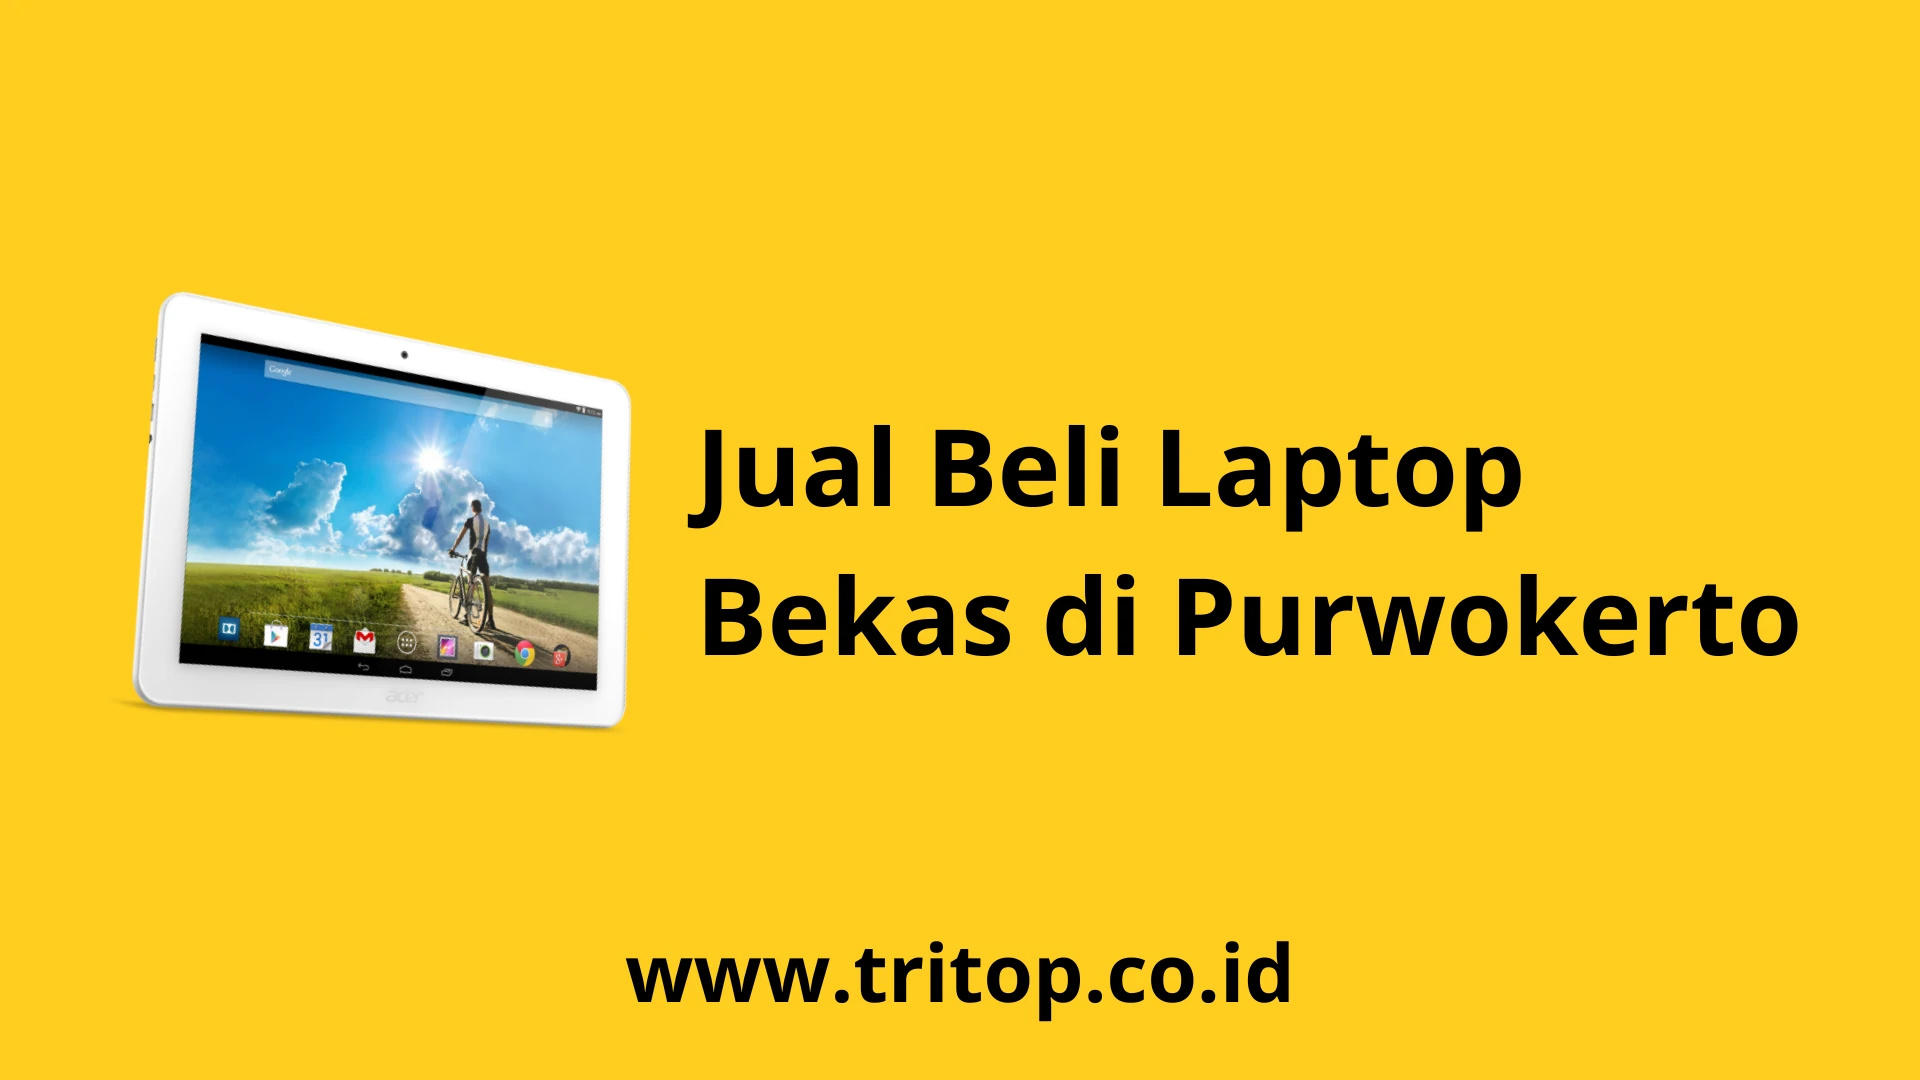 Jual Beli Laptop Bekas Purwokerto Tritop.co.id